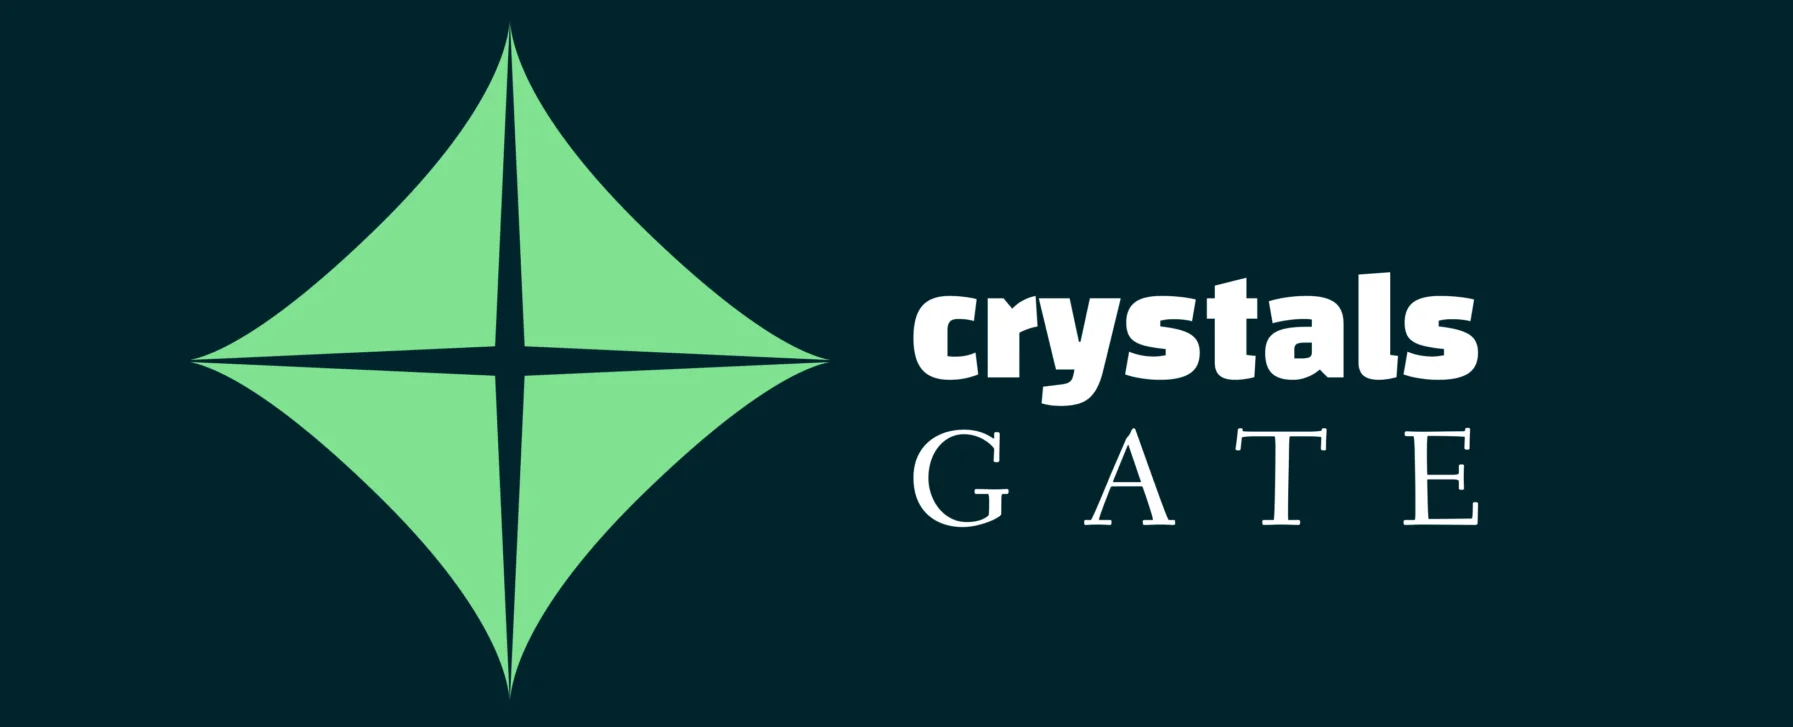 Crystals Gate Logo